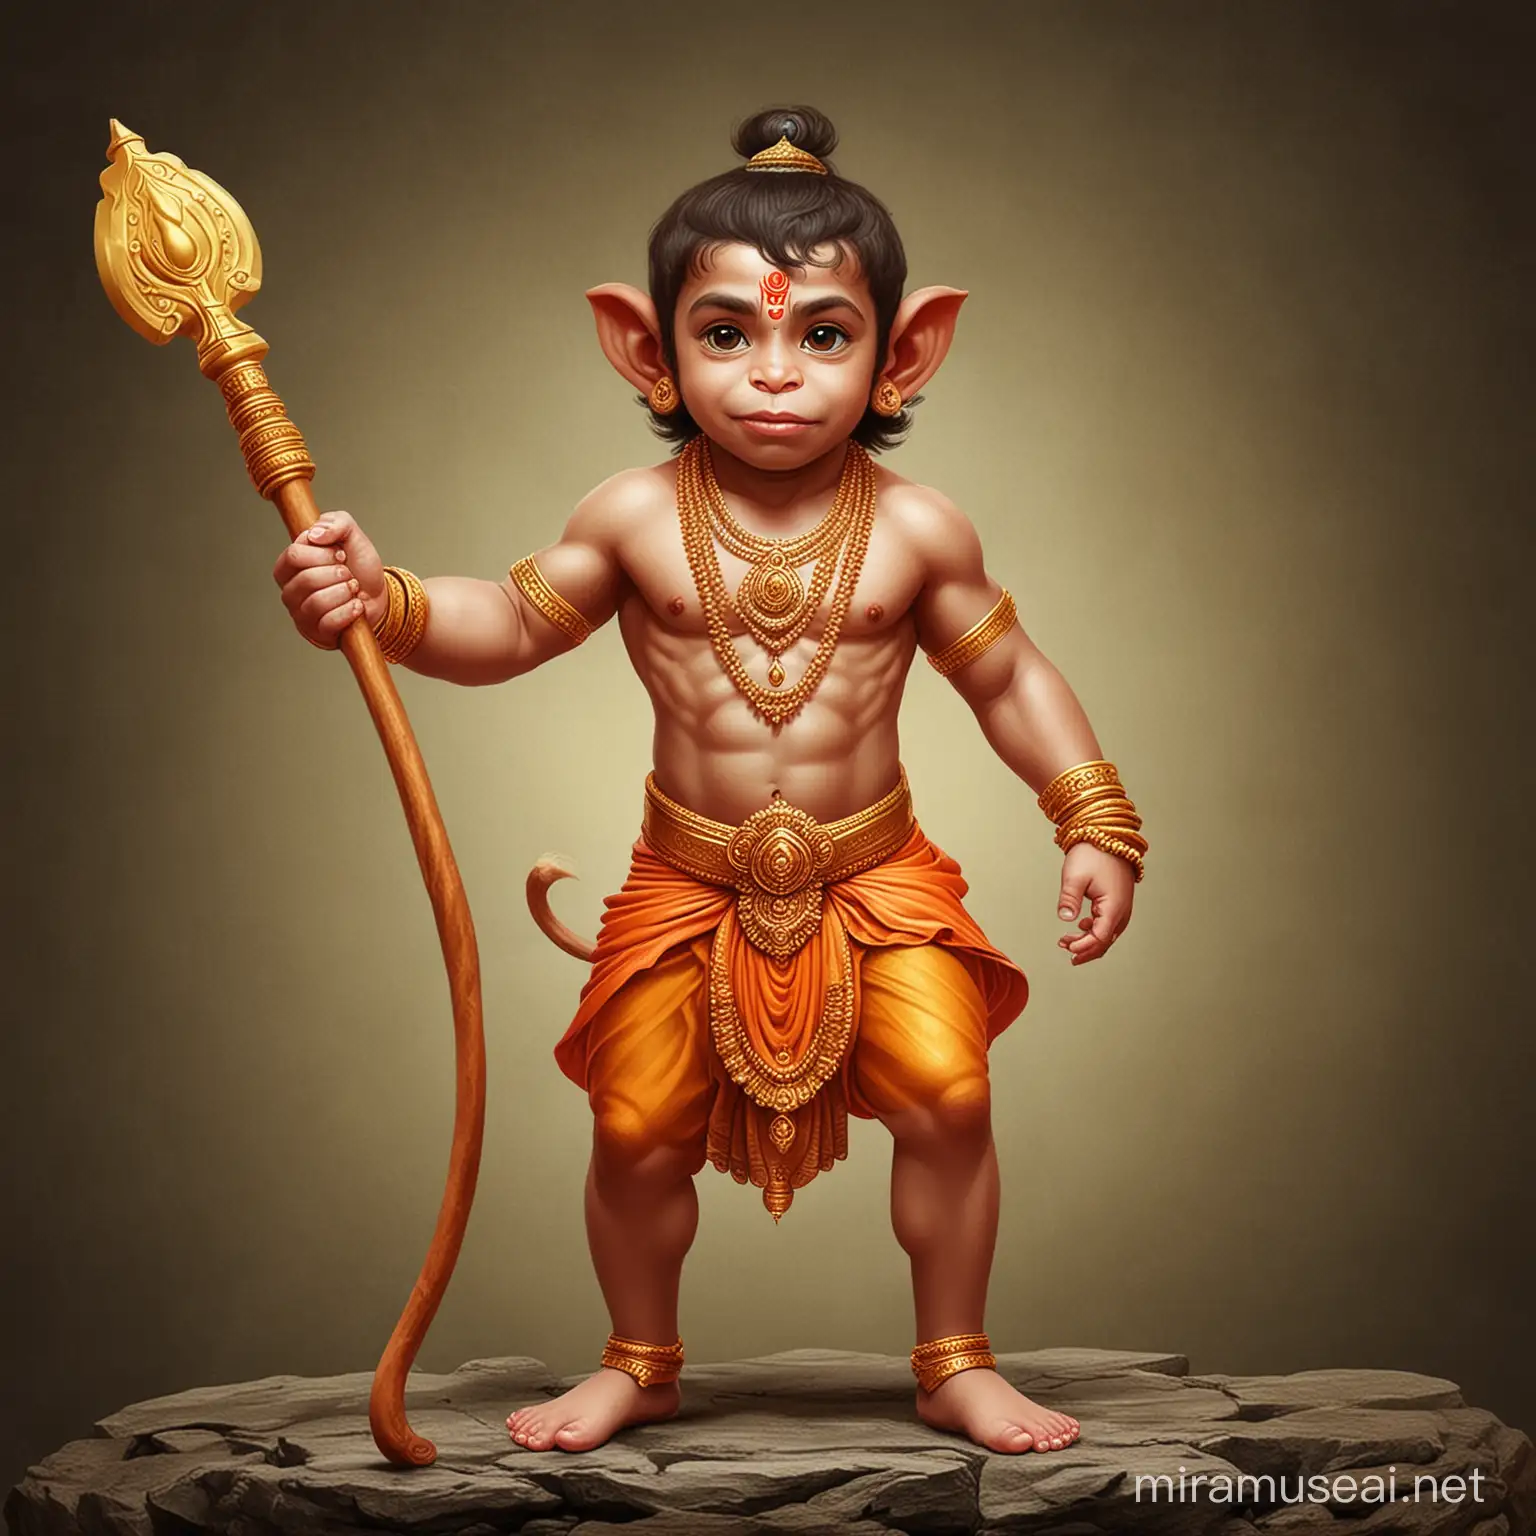 create an image of lord hanuman as kid